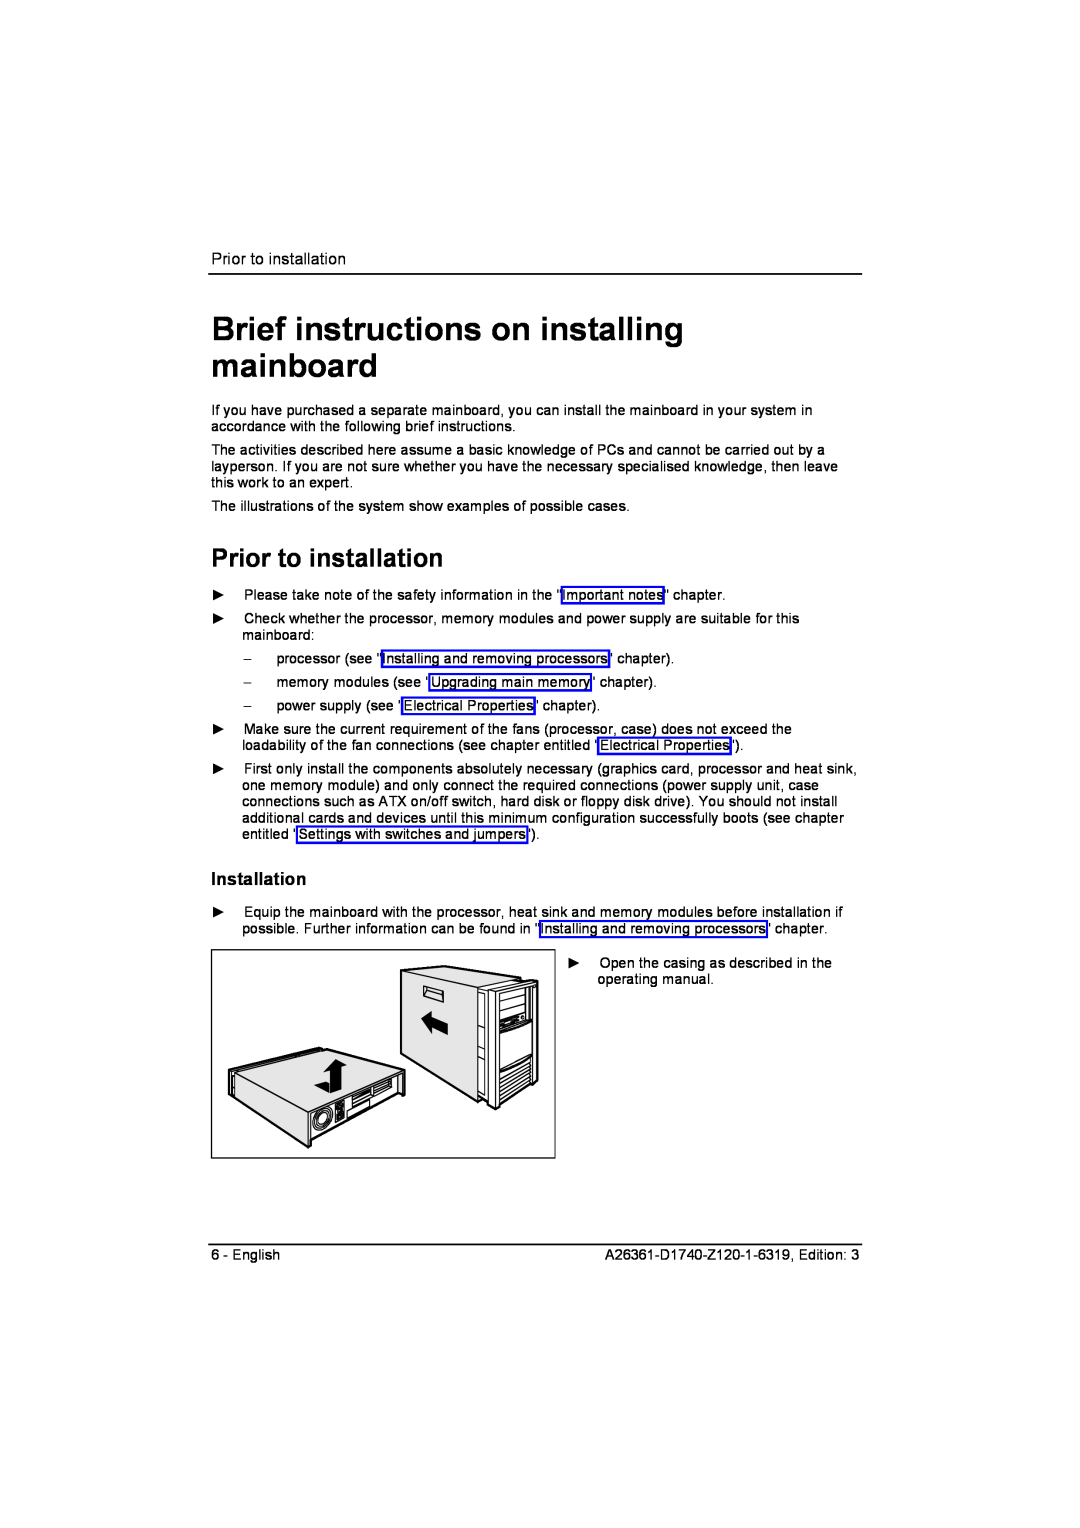 Fujitsu D1740 technical manual Brief instructions on installing mainboard, Prior to installation, Installation 